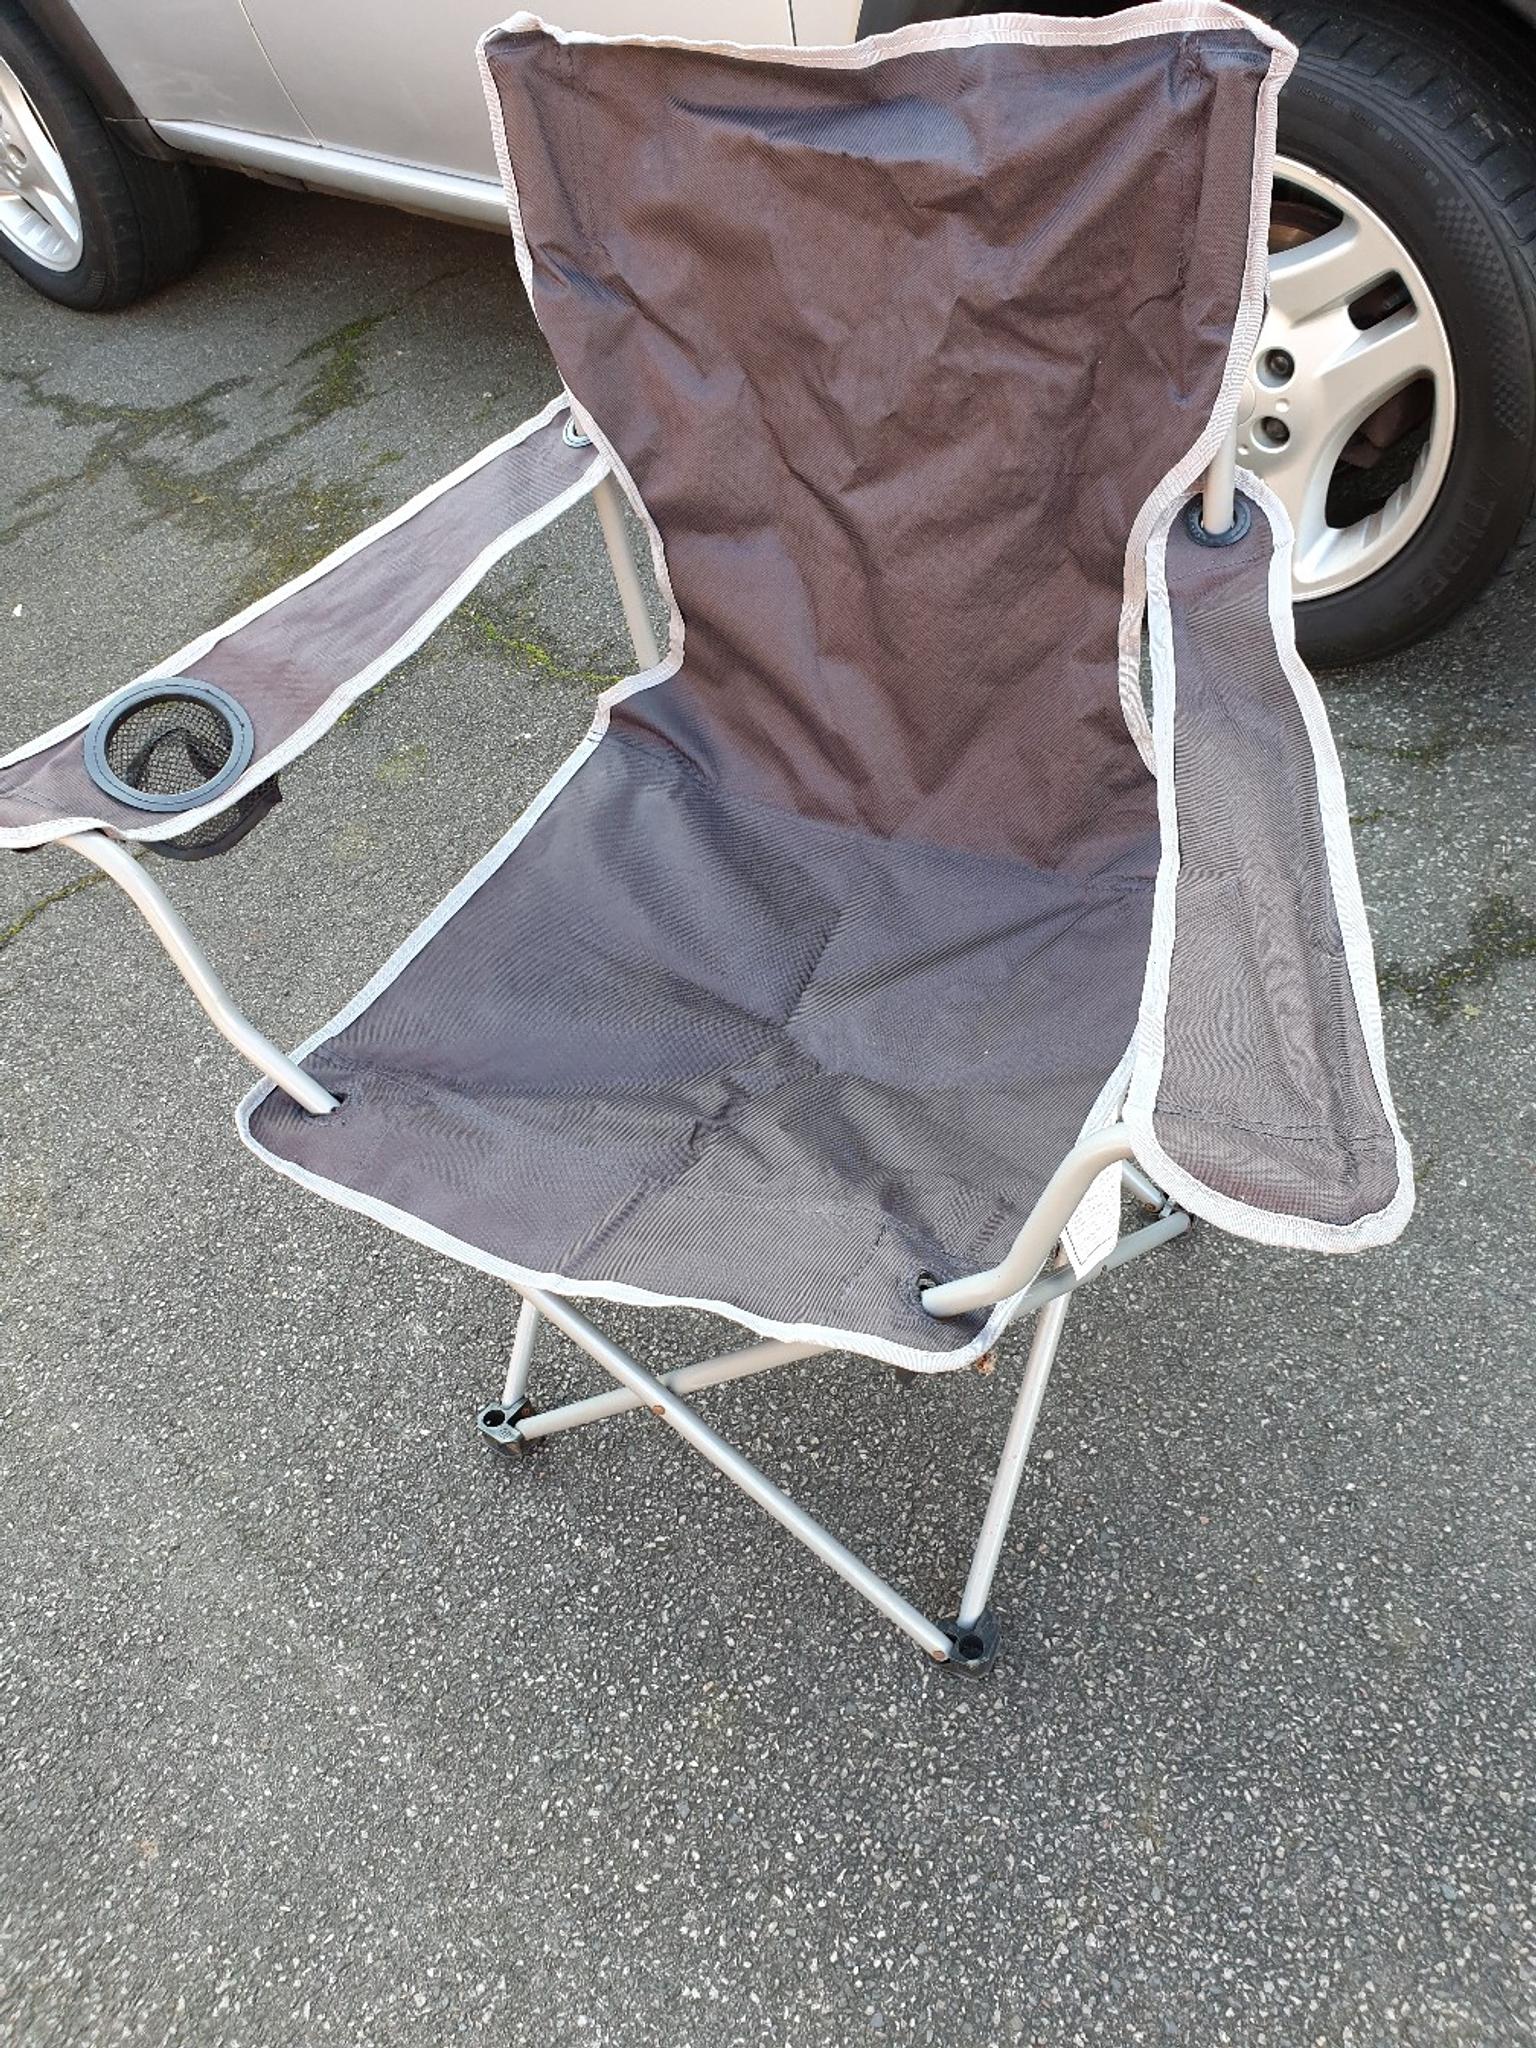 childrens camping chair asda